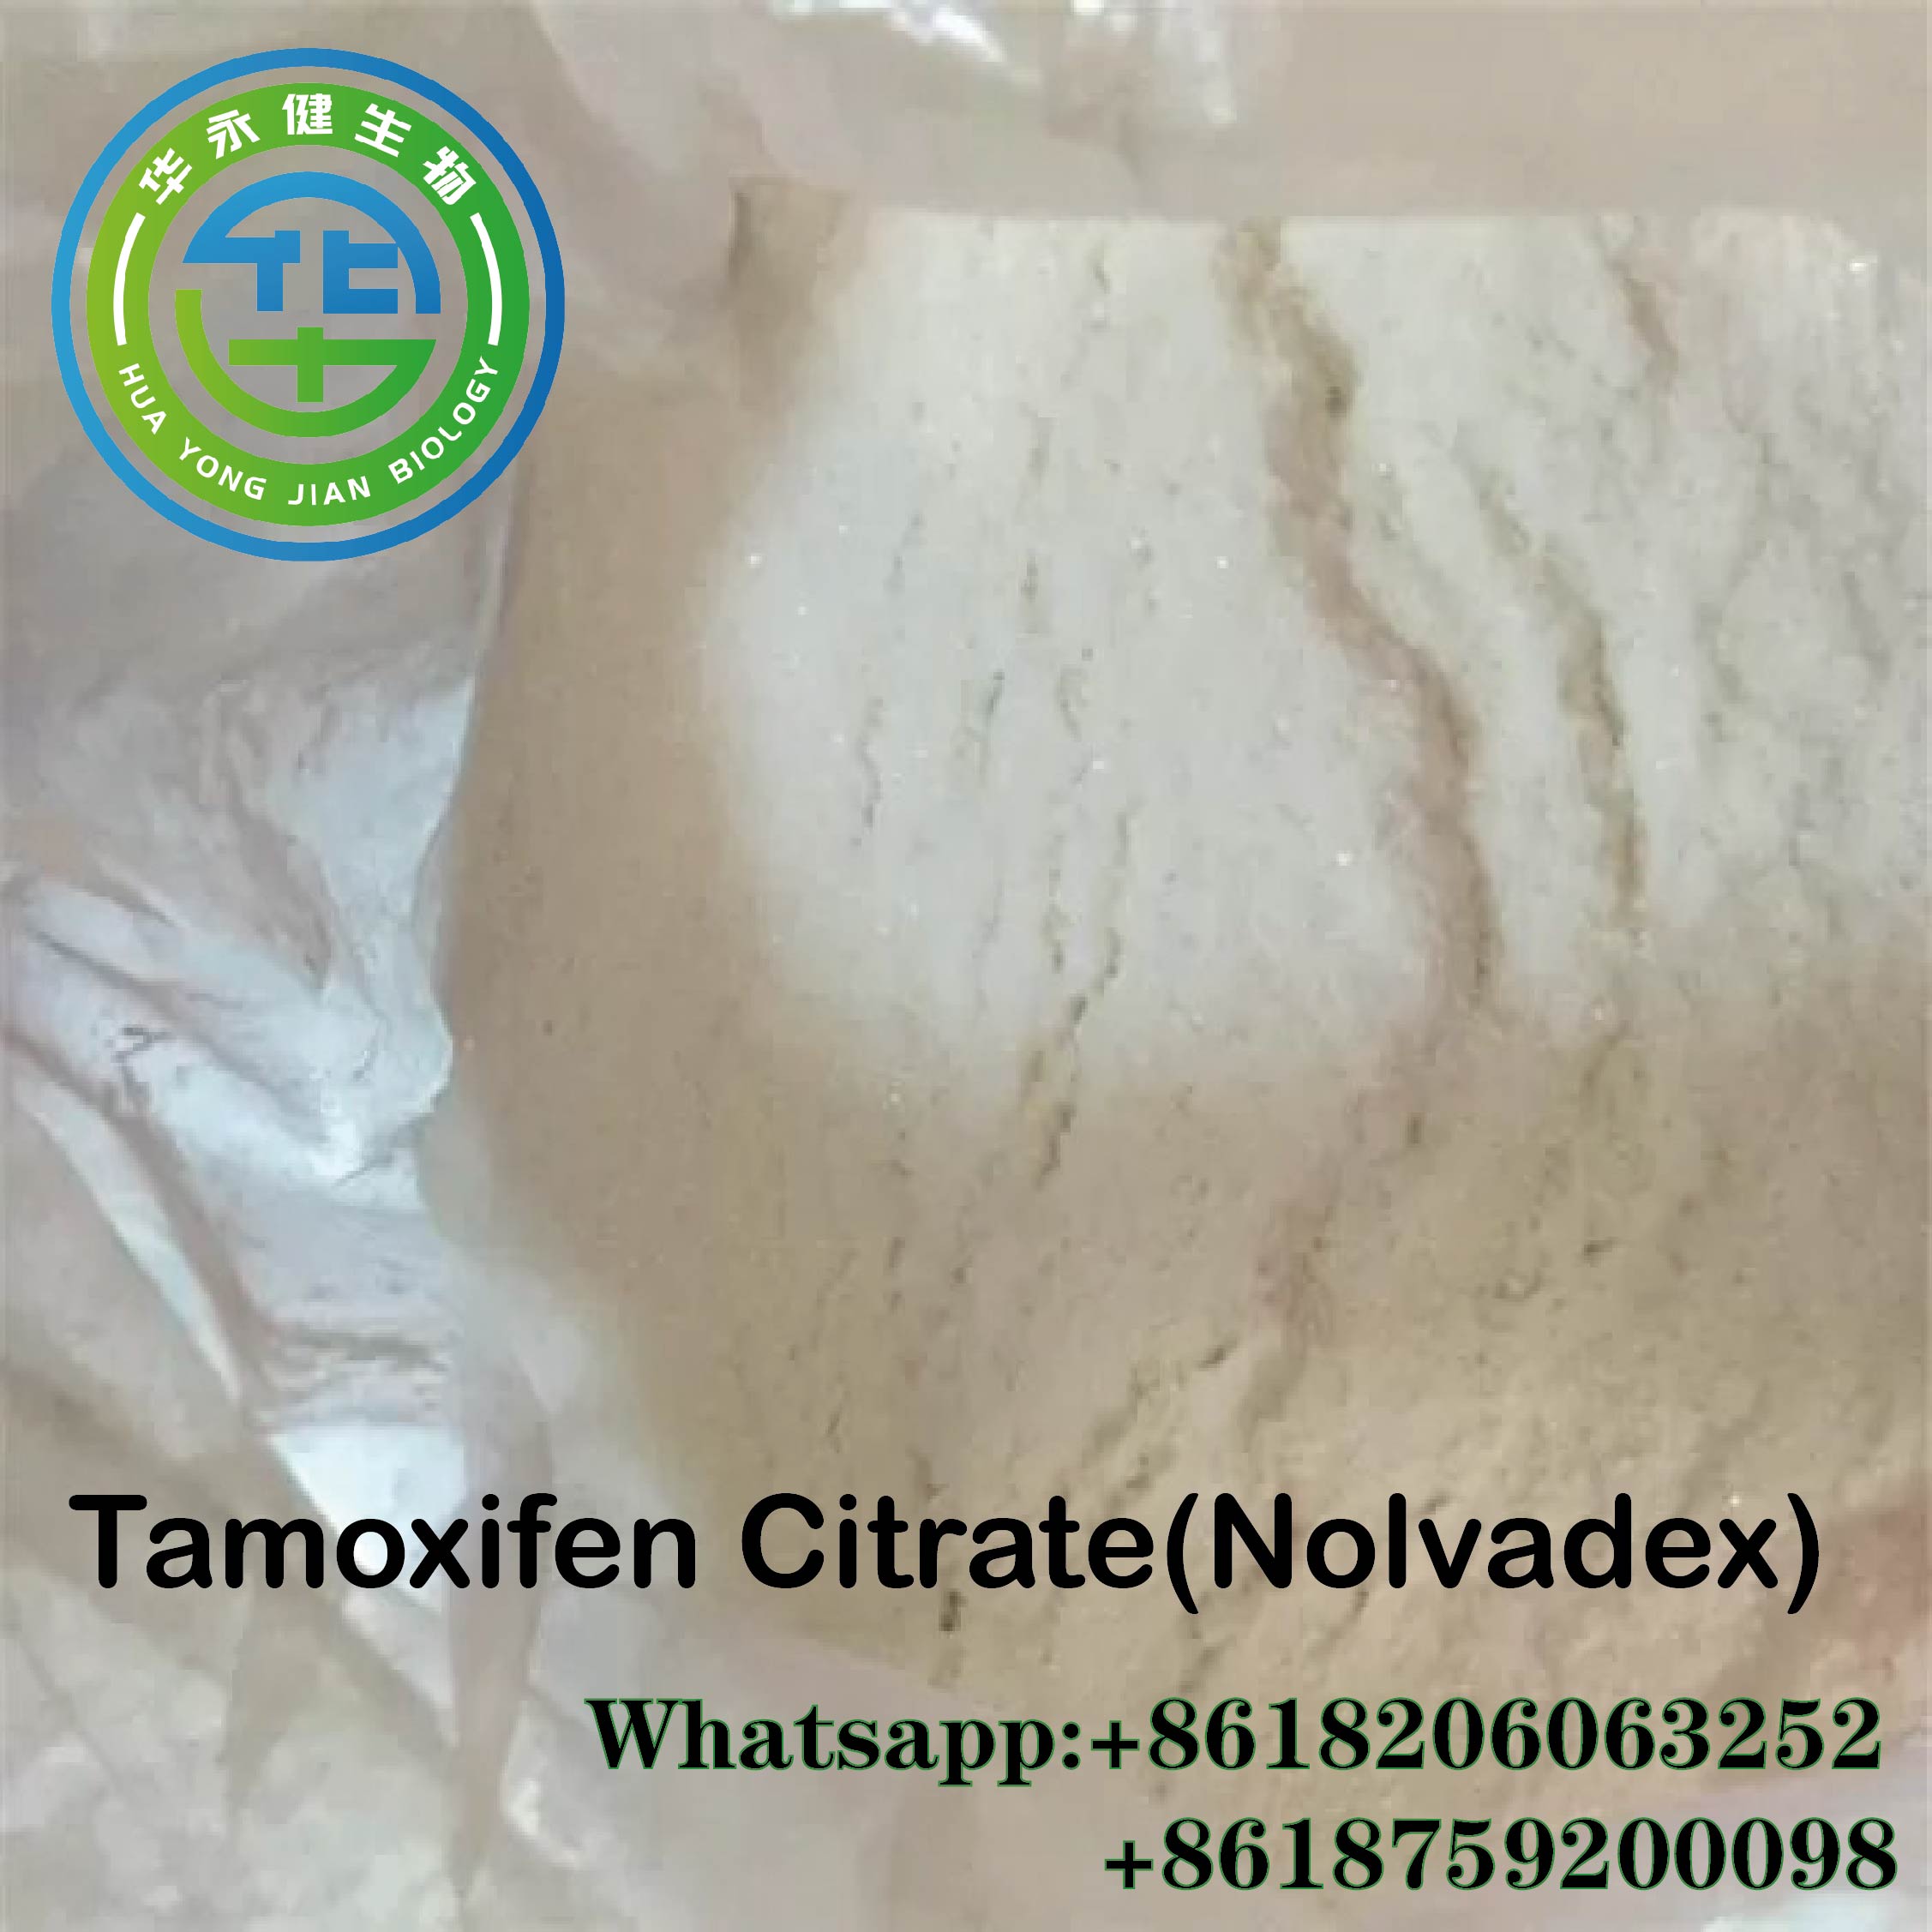 Nolvadex Weight Lose and male ehance powder Anti Estrogen Steroids Tamoxifen Citrate CasNO.54965-24-1